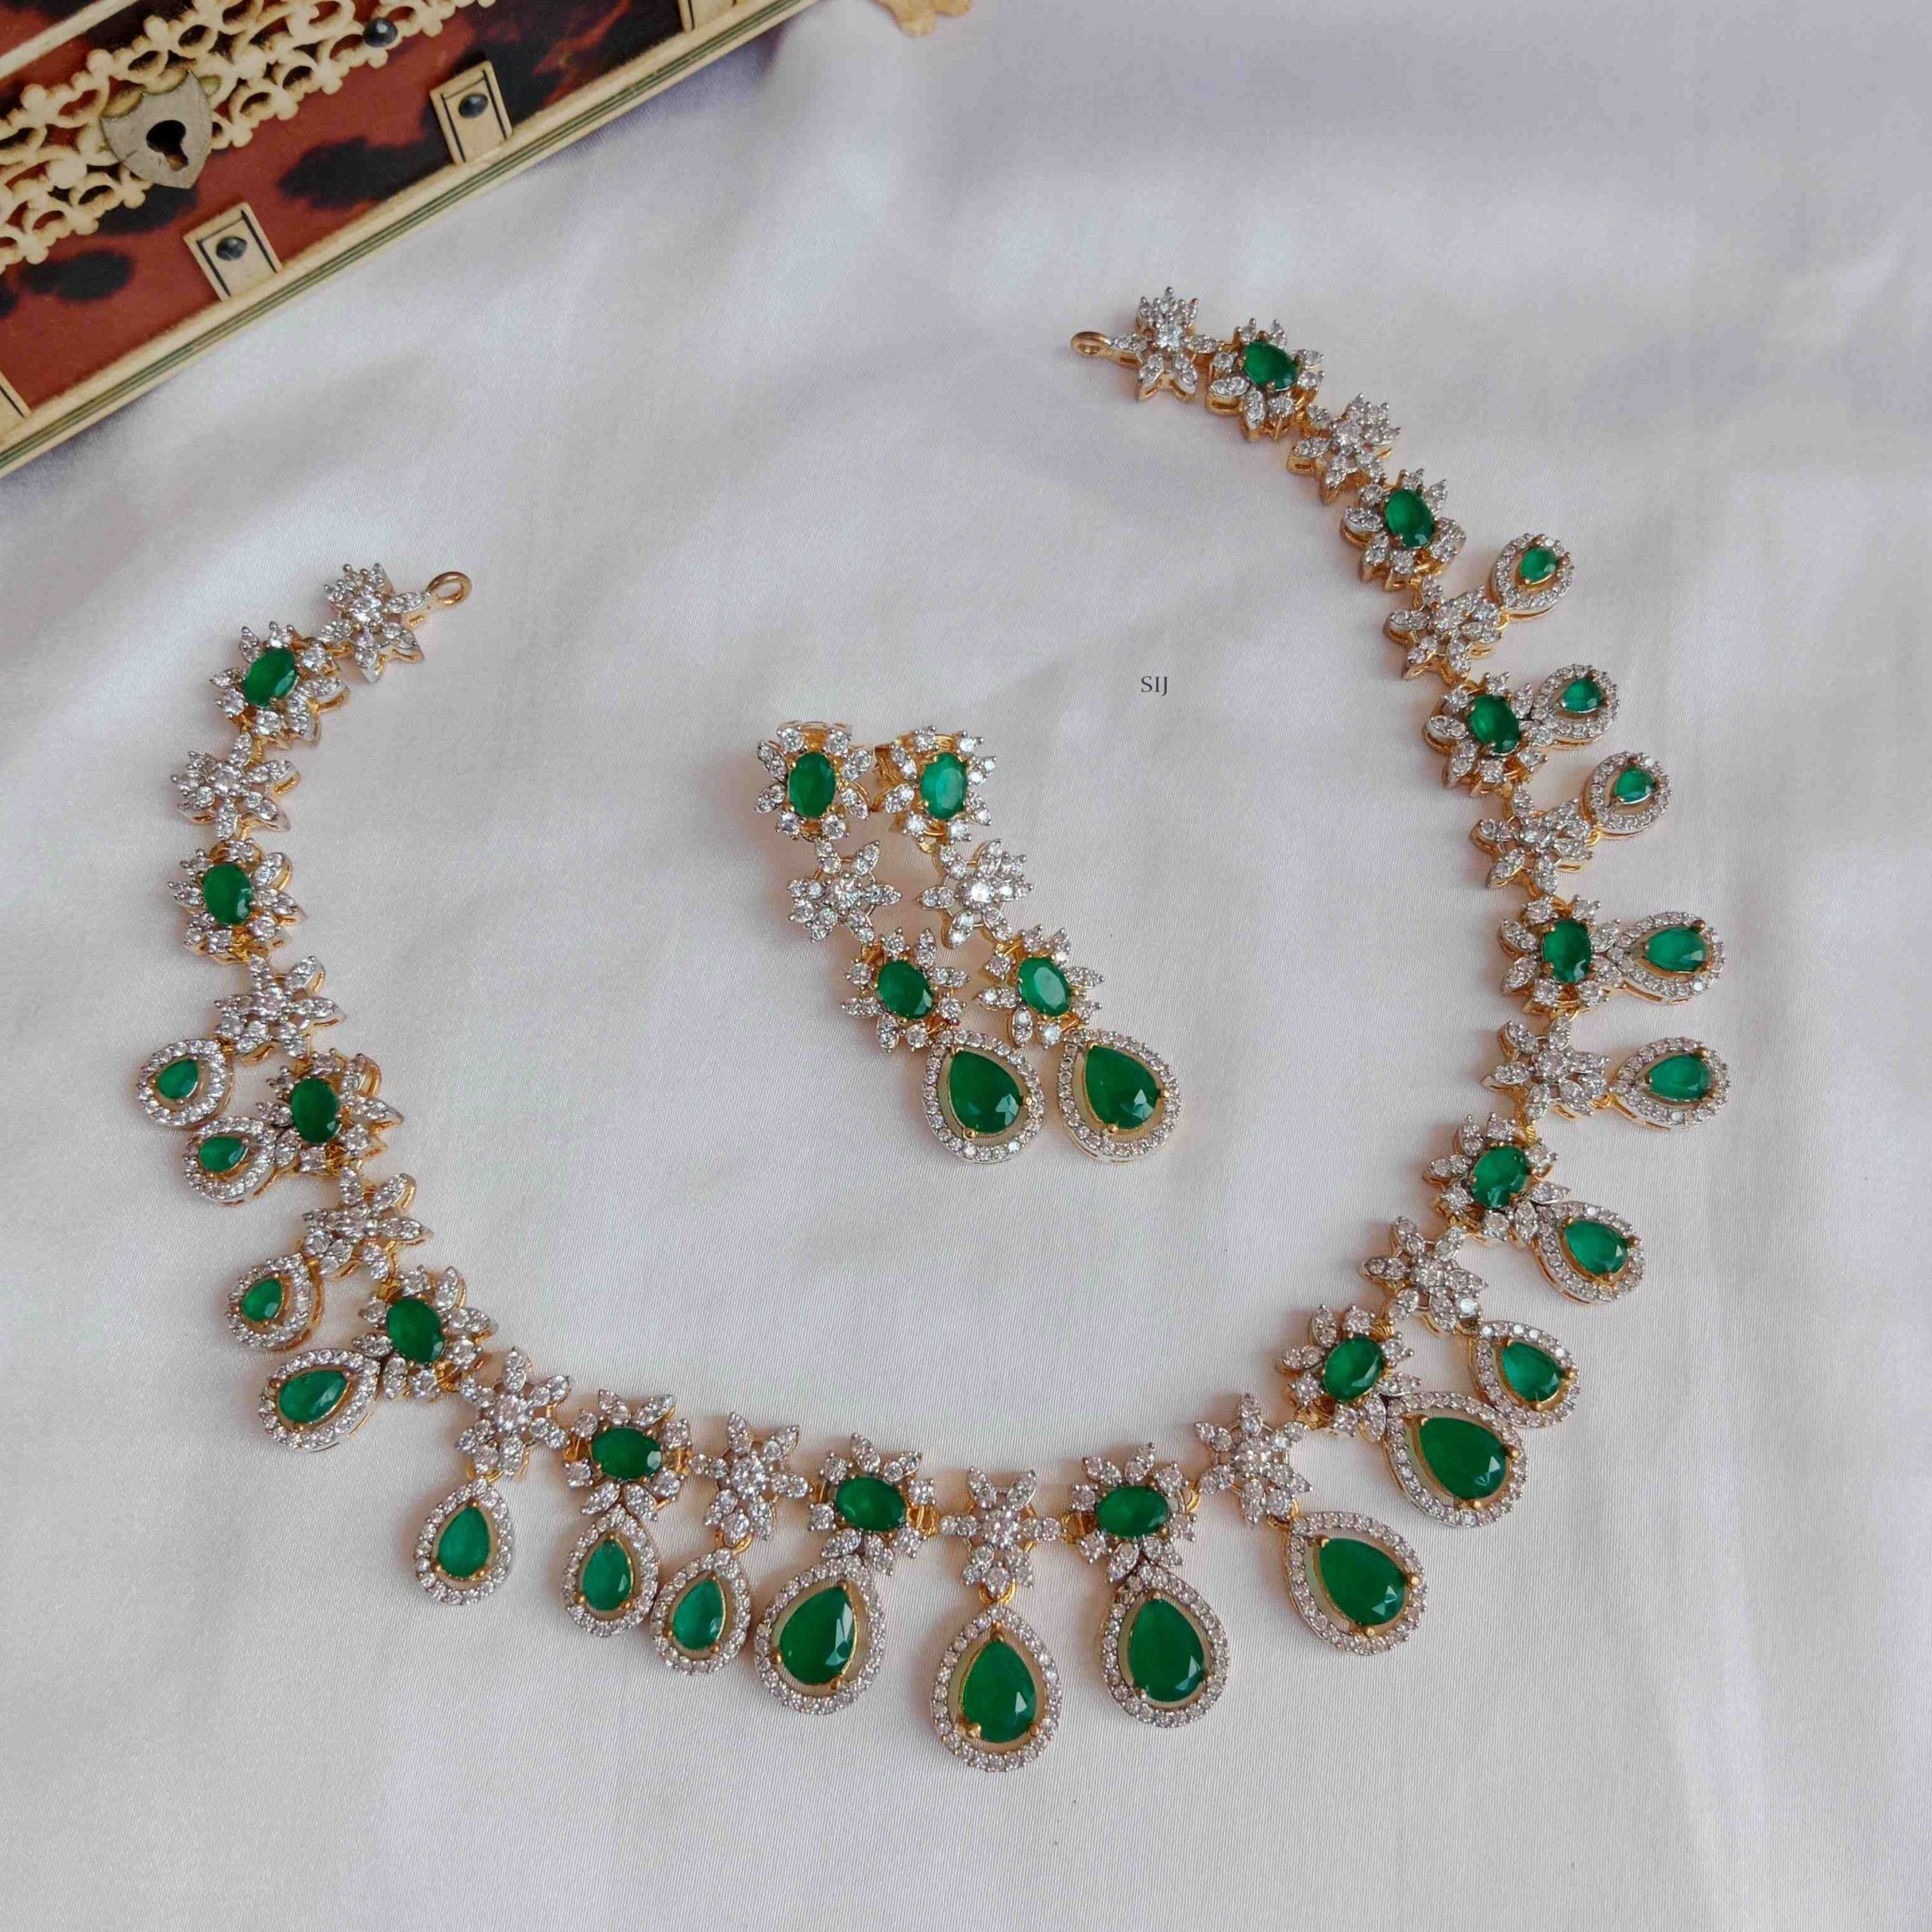 Imitation Emerald and Diamond Necklace